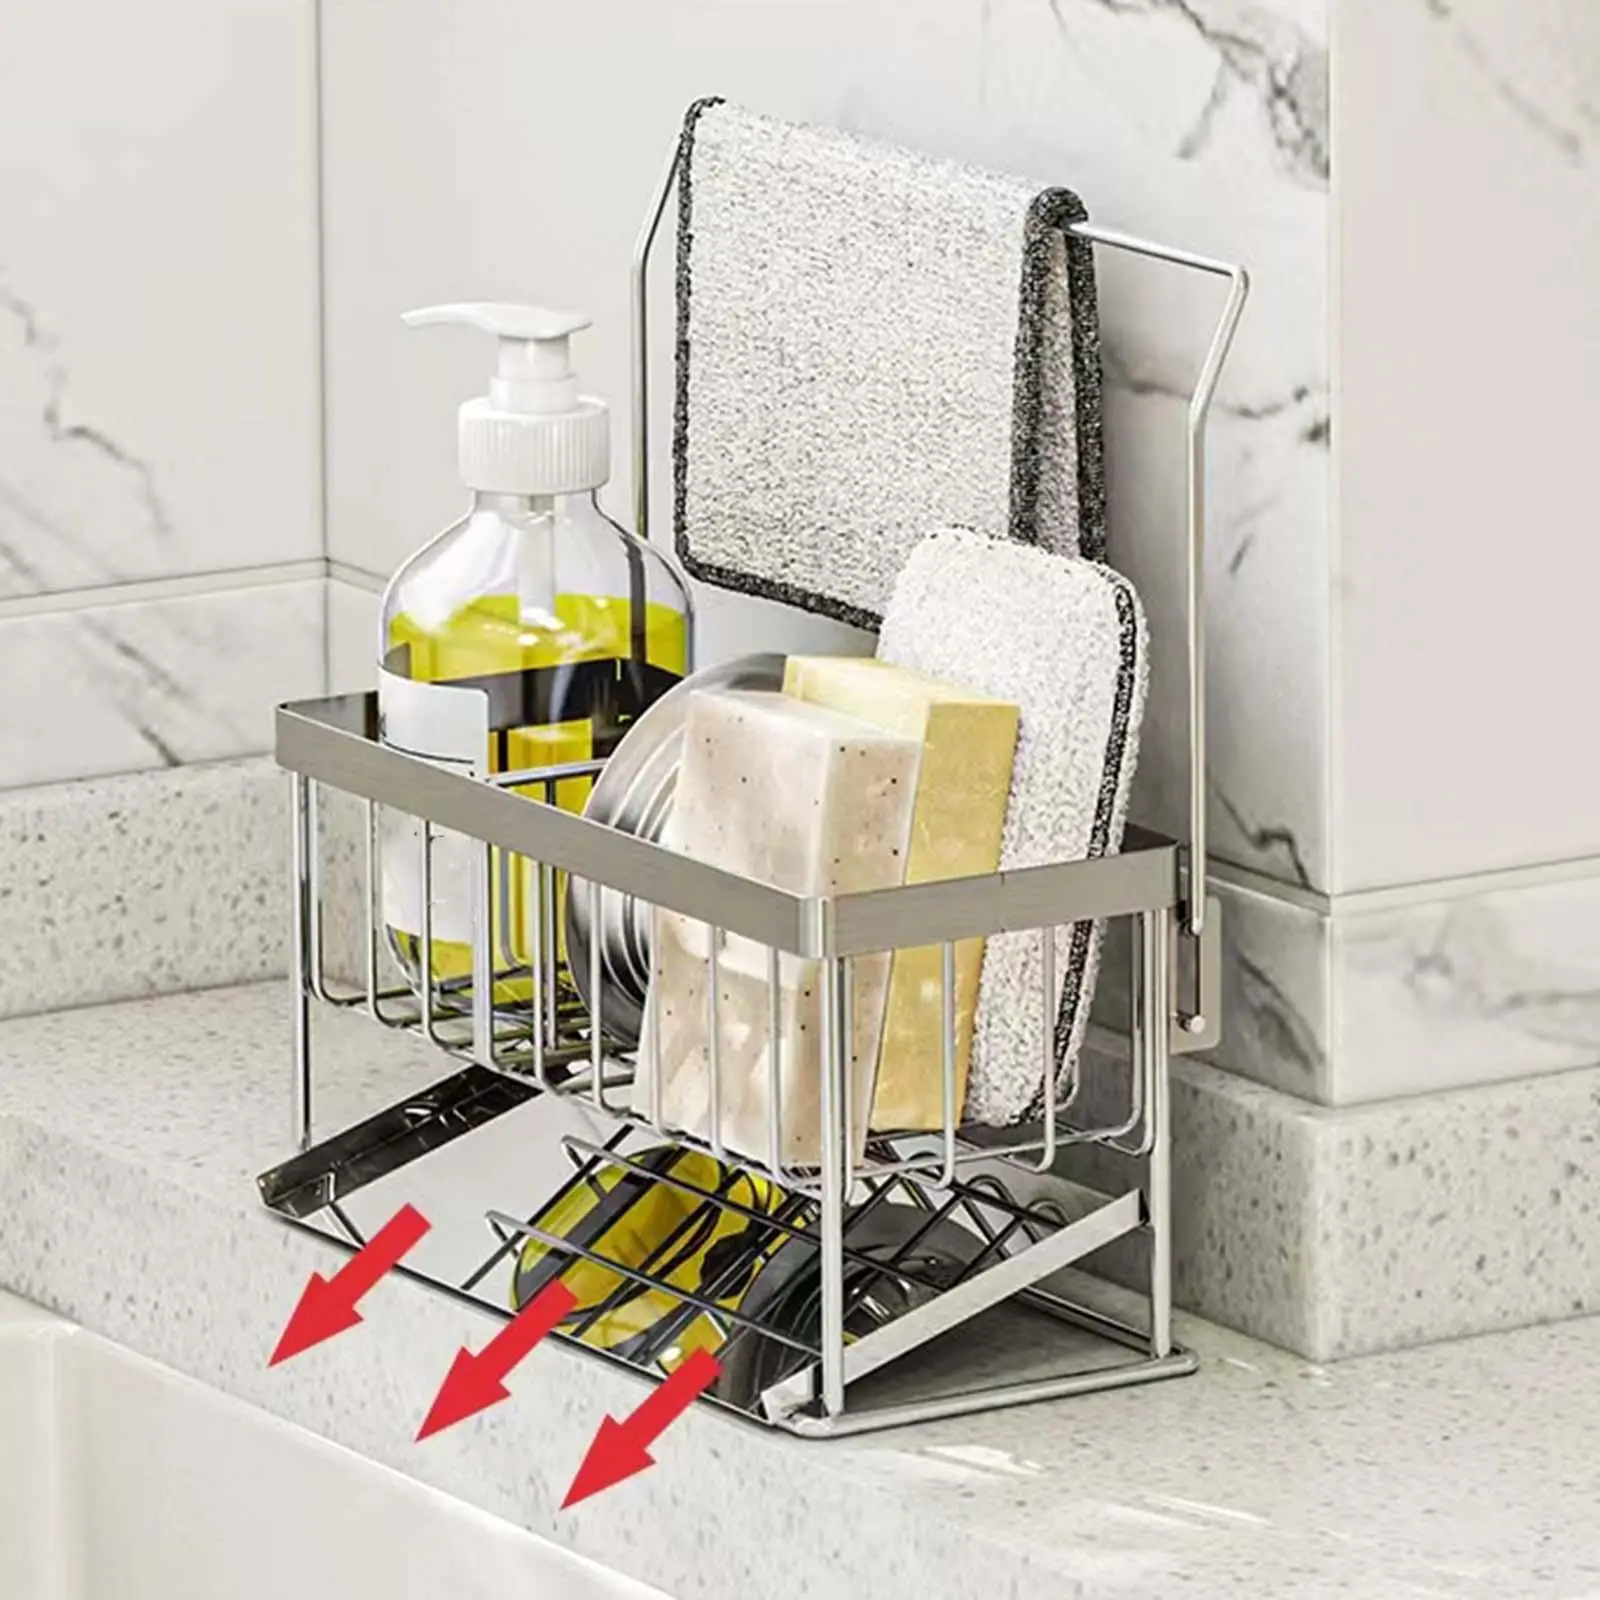 Stainless Steel Sink Drain Rack Free Standing Organization Brush Soap Holder Rustproof Durable Kitchen Sponge Holder